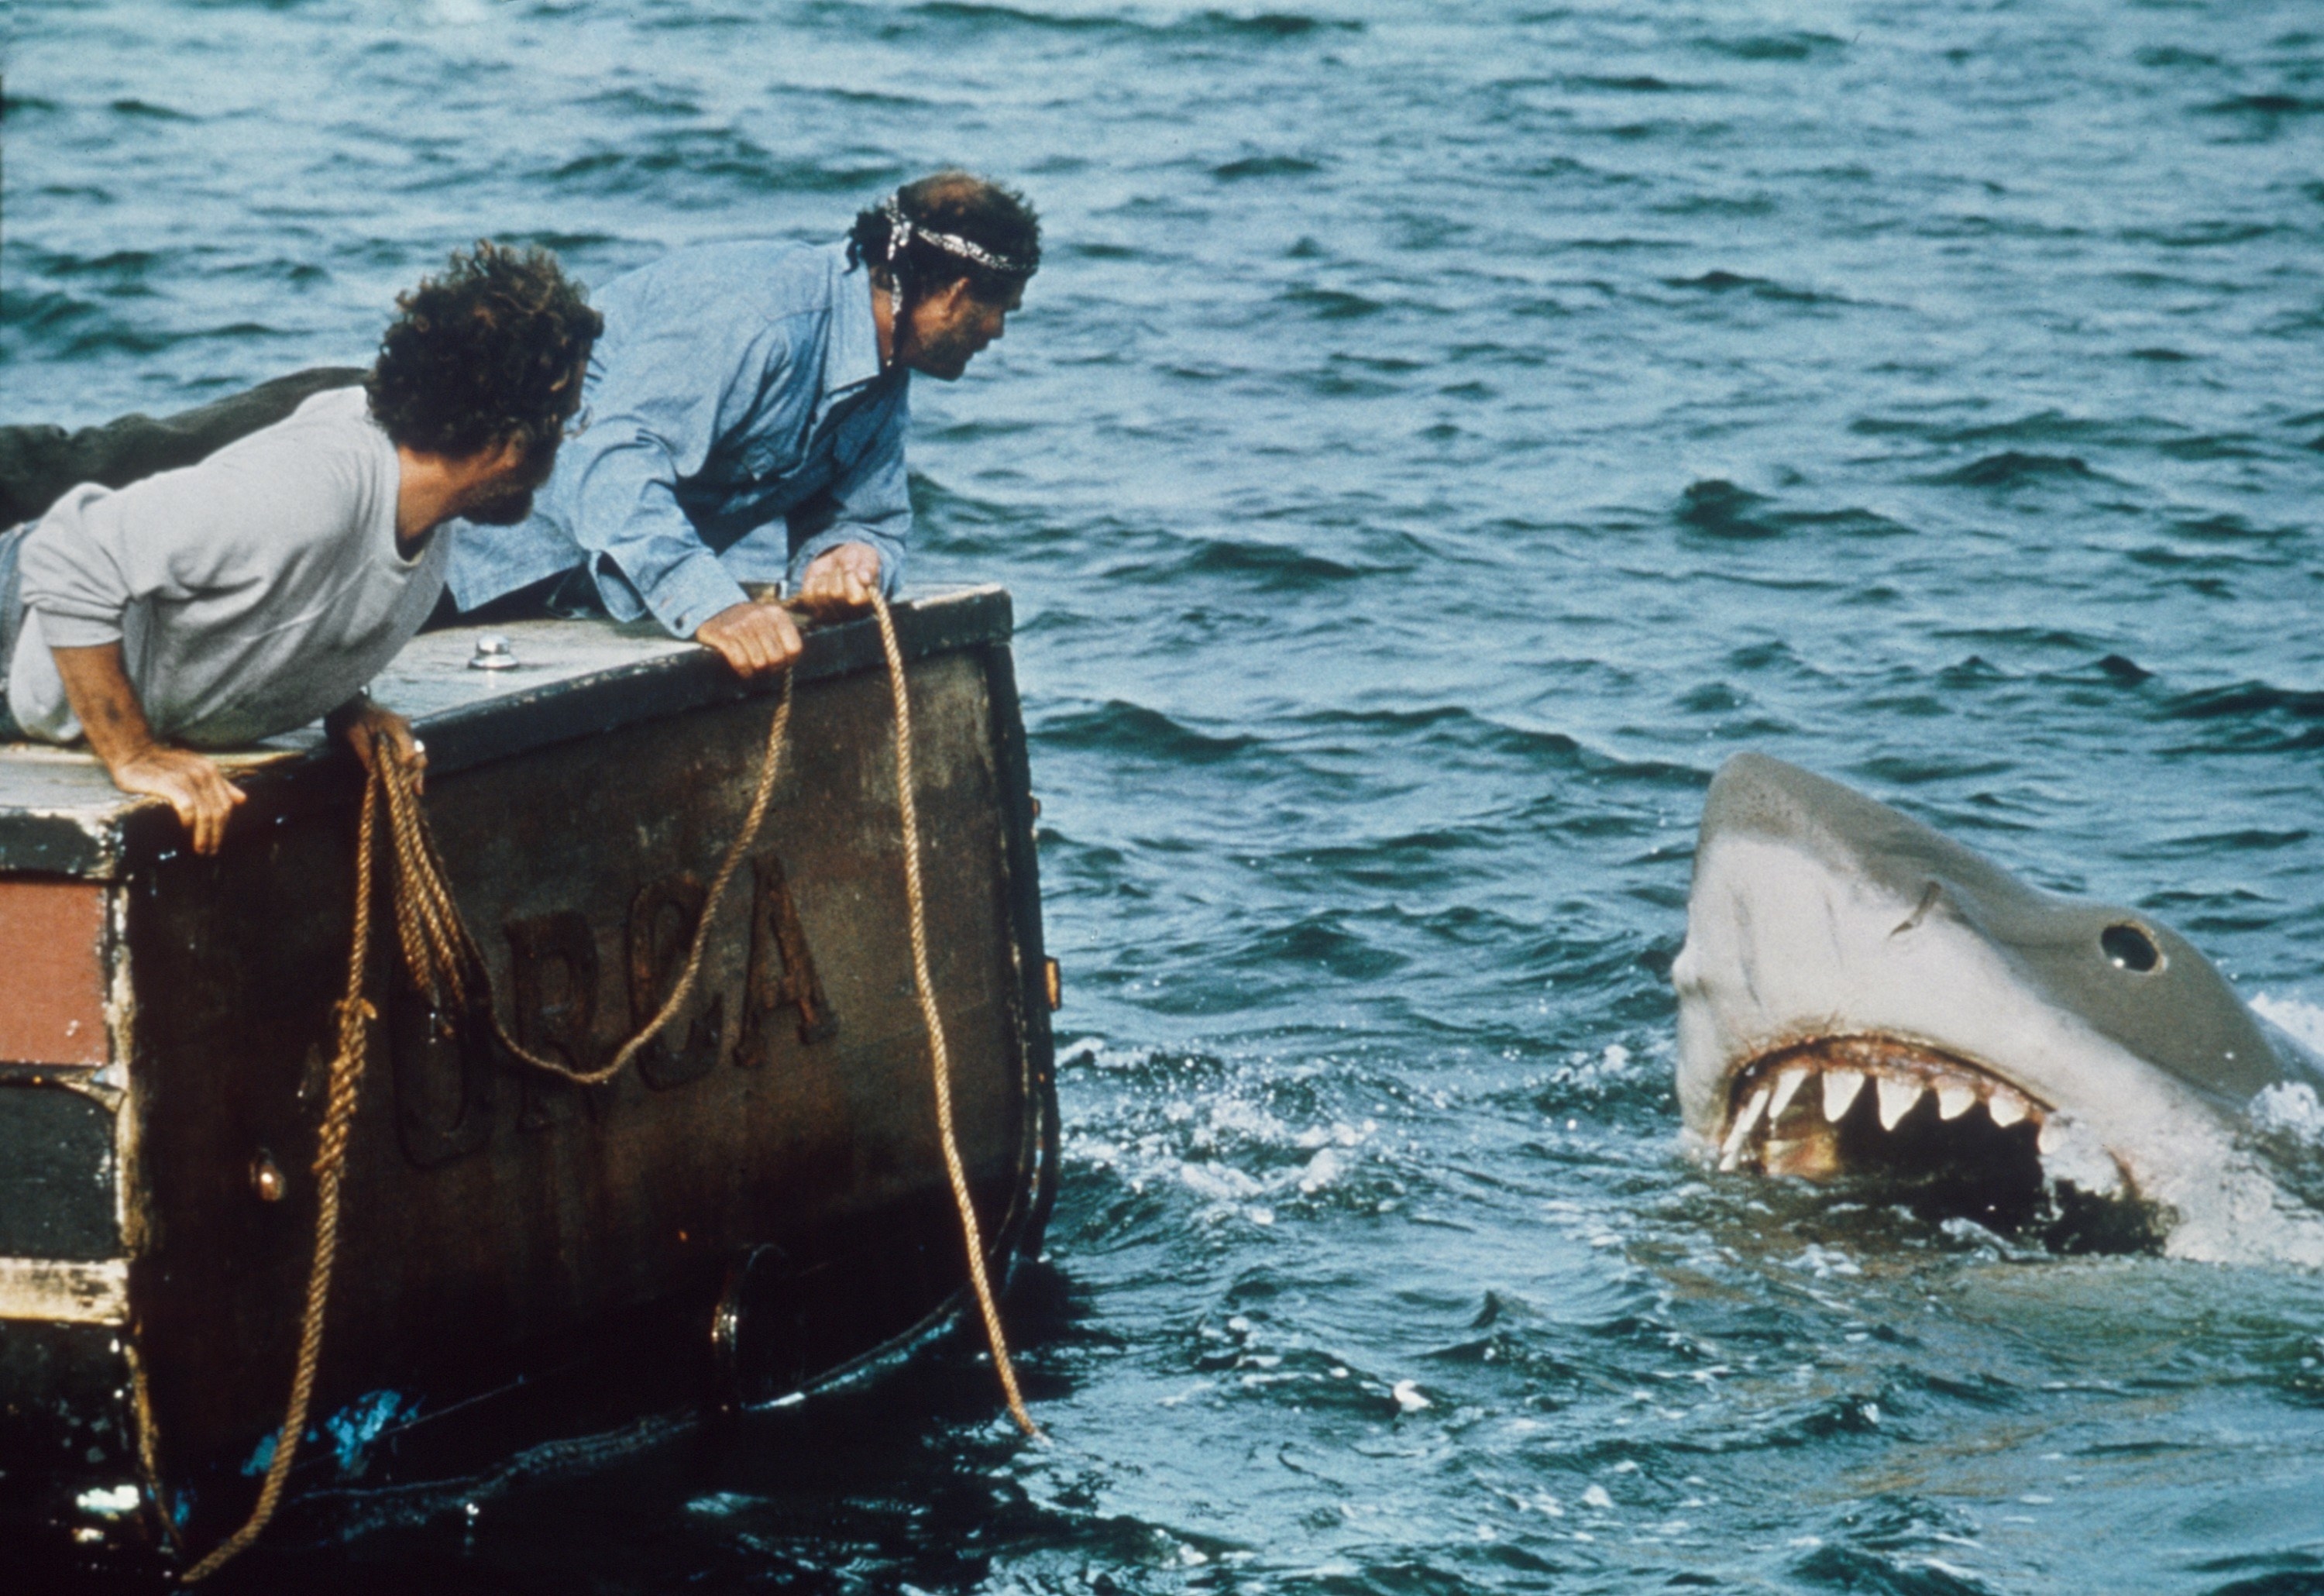 A shark jumps out of the water at Richard Dreyfuss and Robert Shaw